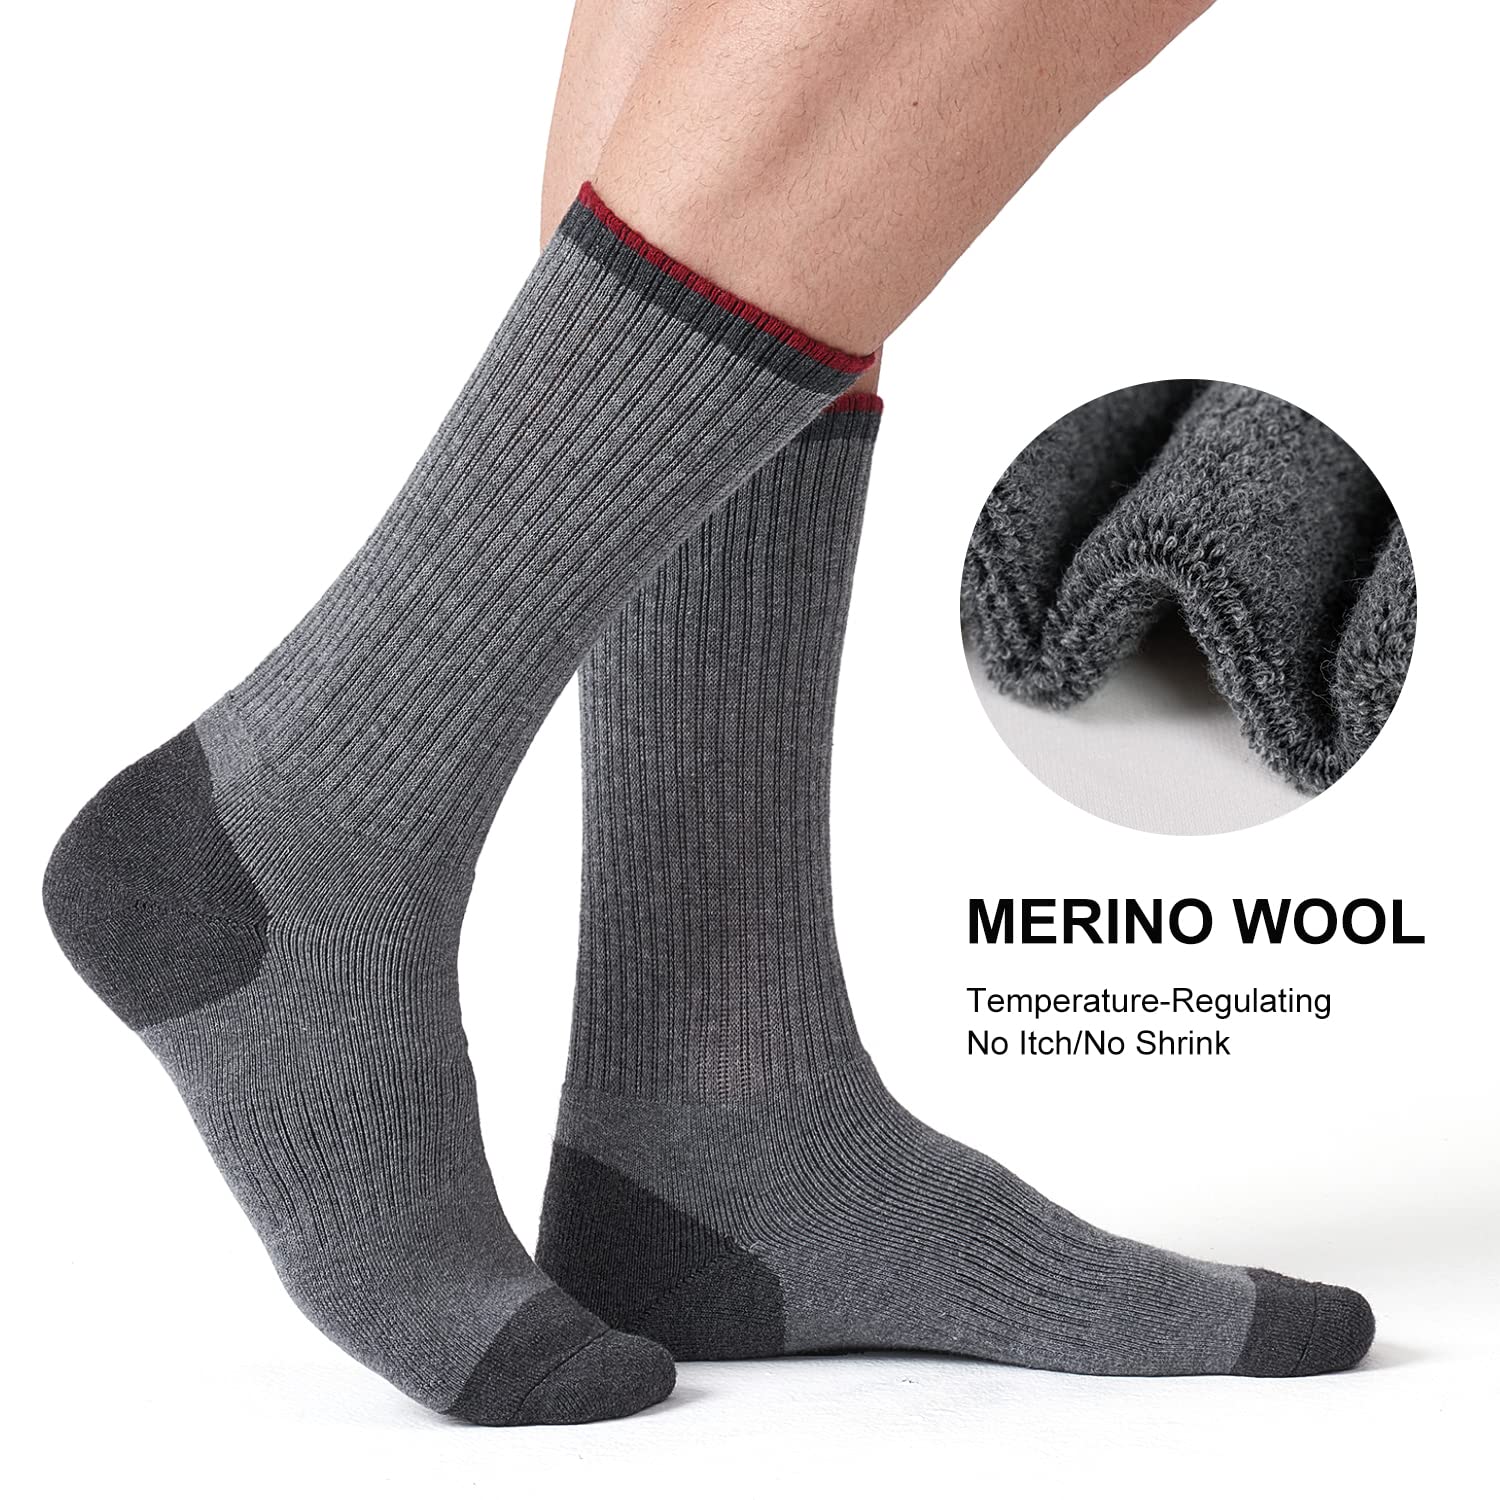 CS CELERSPORT 3 Pack Men's Merino Wool Hiking Socks Crew Socks with Full Cushion Warm Winter Socks Thermal Boot Socks, Black, Shoe Size 12-14